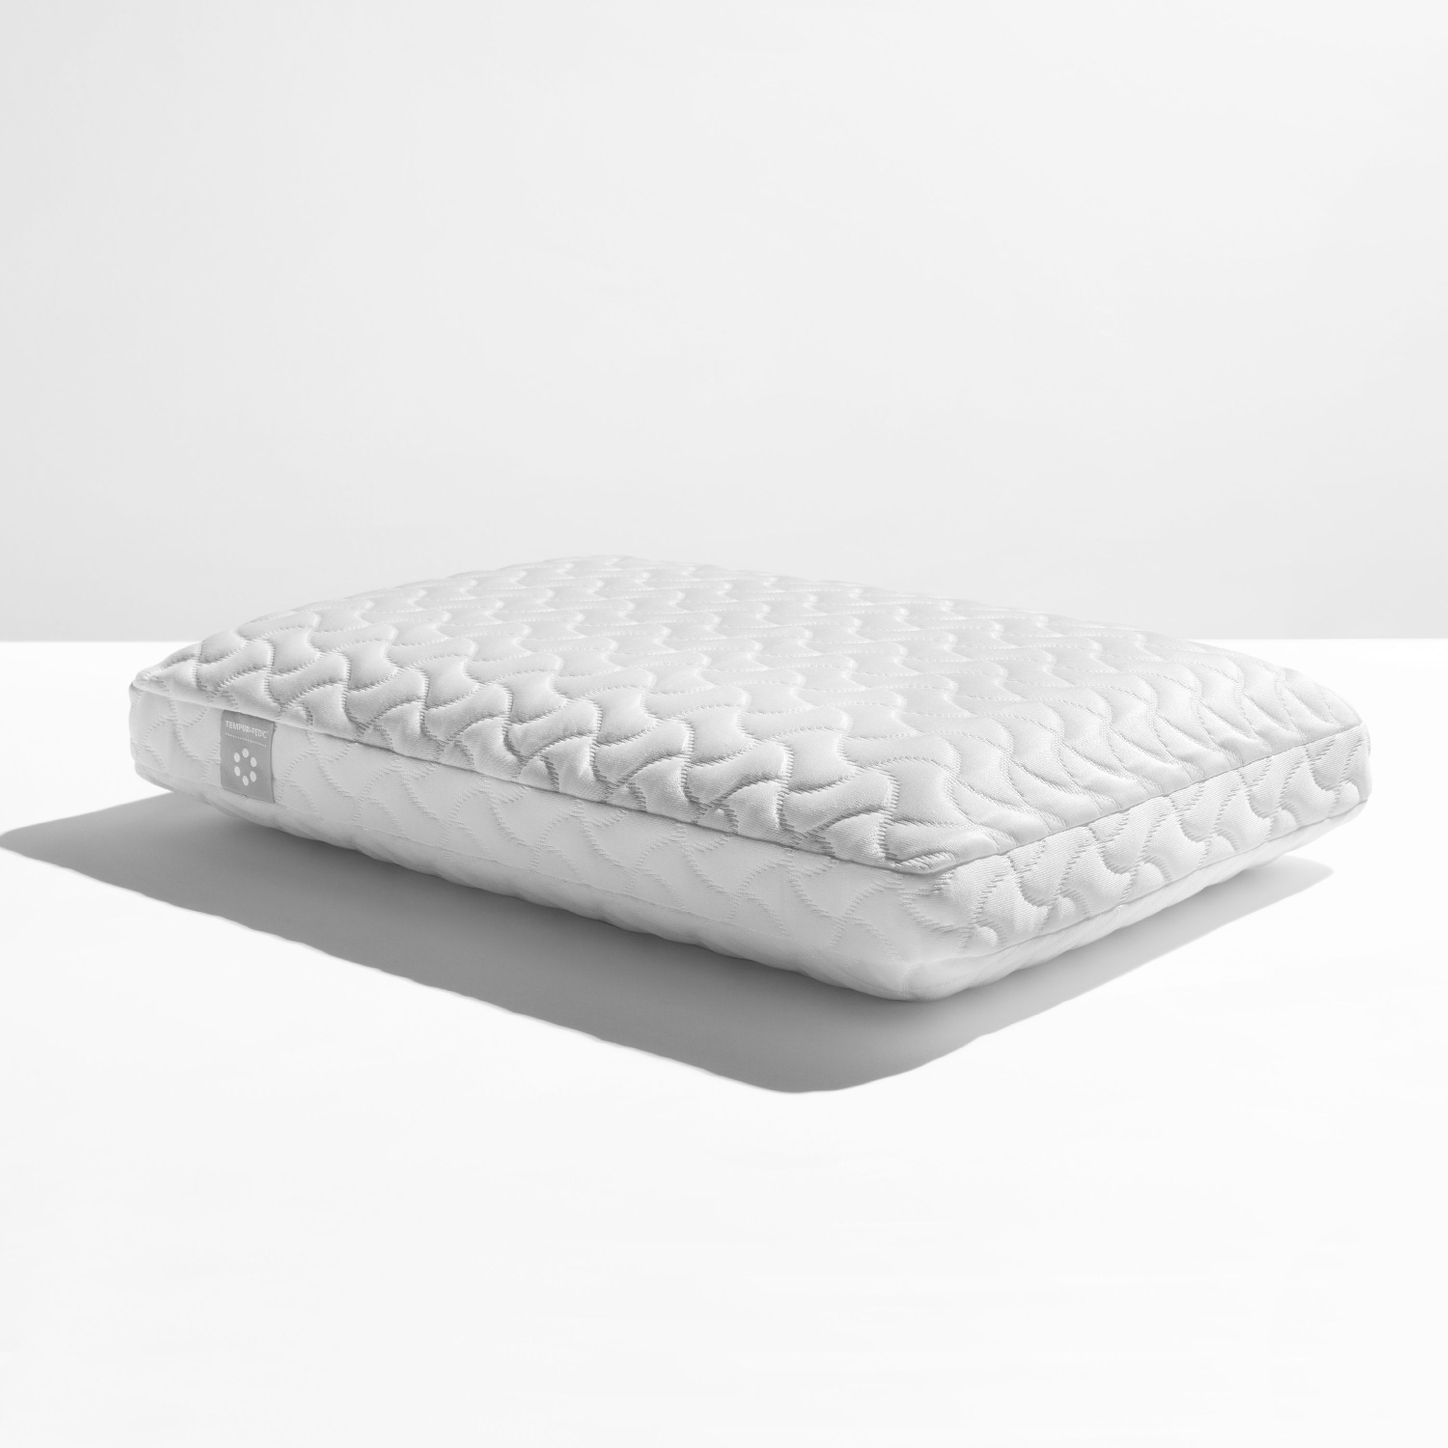 10 Best Memory Foam Cushions Review - The Jerusalem Post